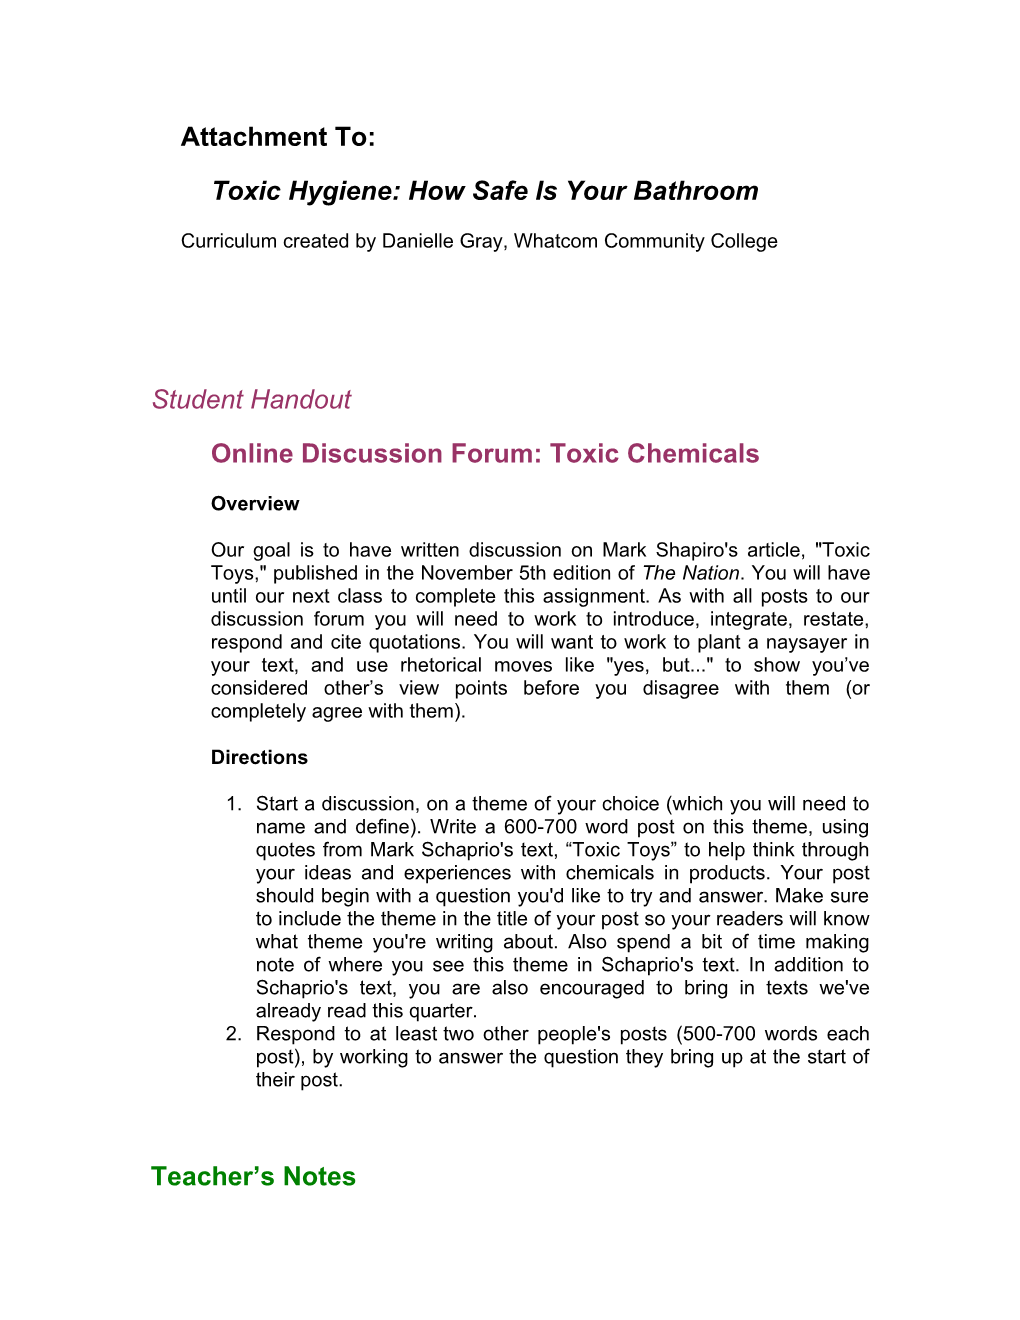 Toxic Hygiene: How Safe Is Your Bathroom